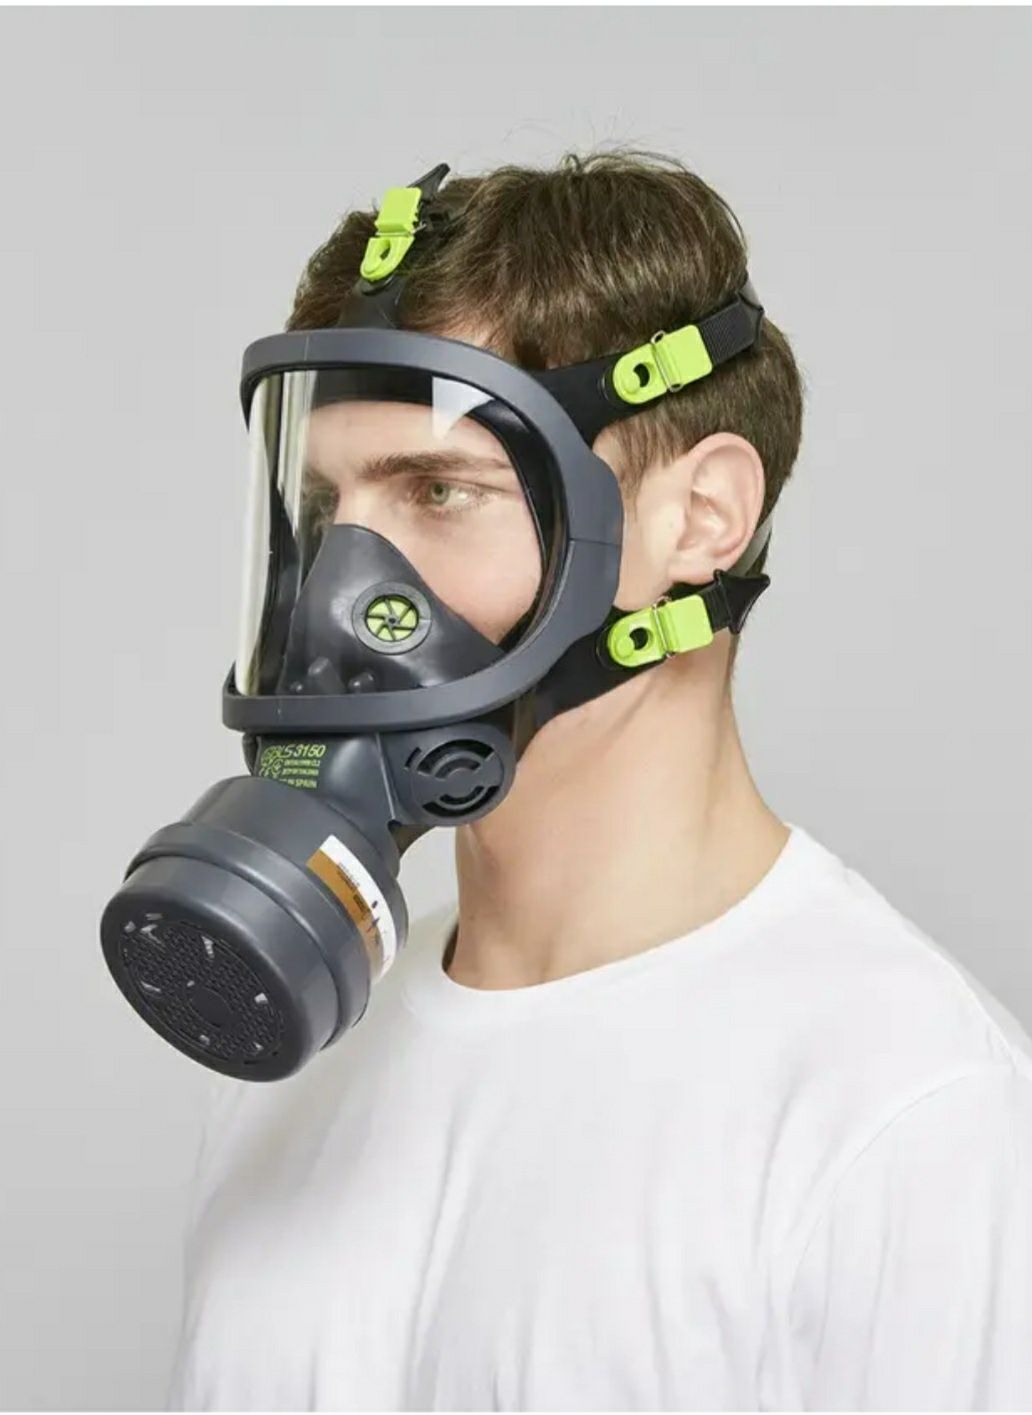 Повнолицева захисна маска BLS 3150 (Противогаз) + 2 фільтра 430ABEK2Hg